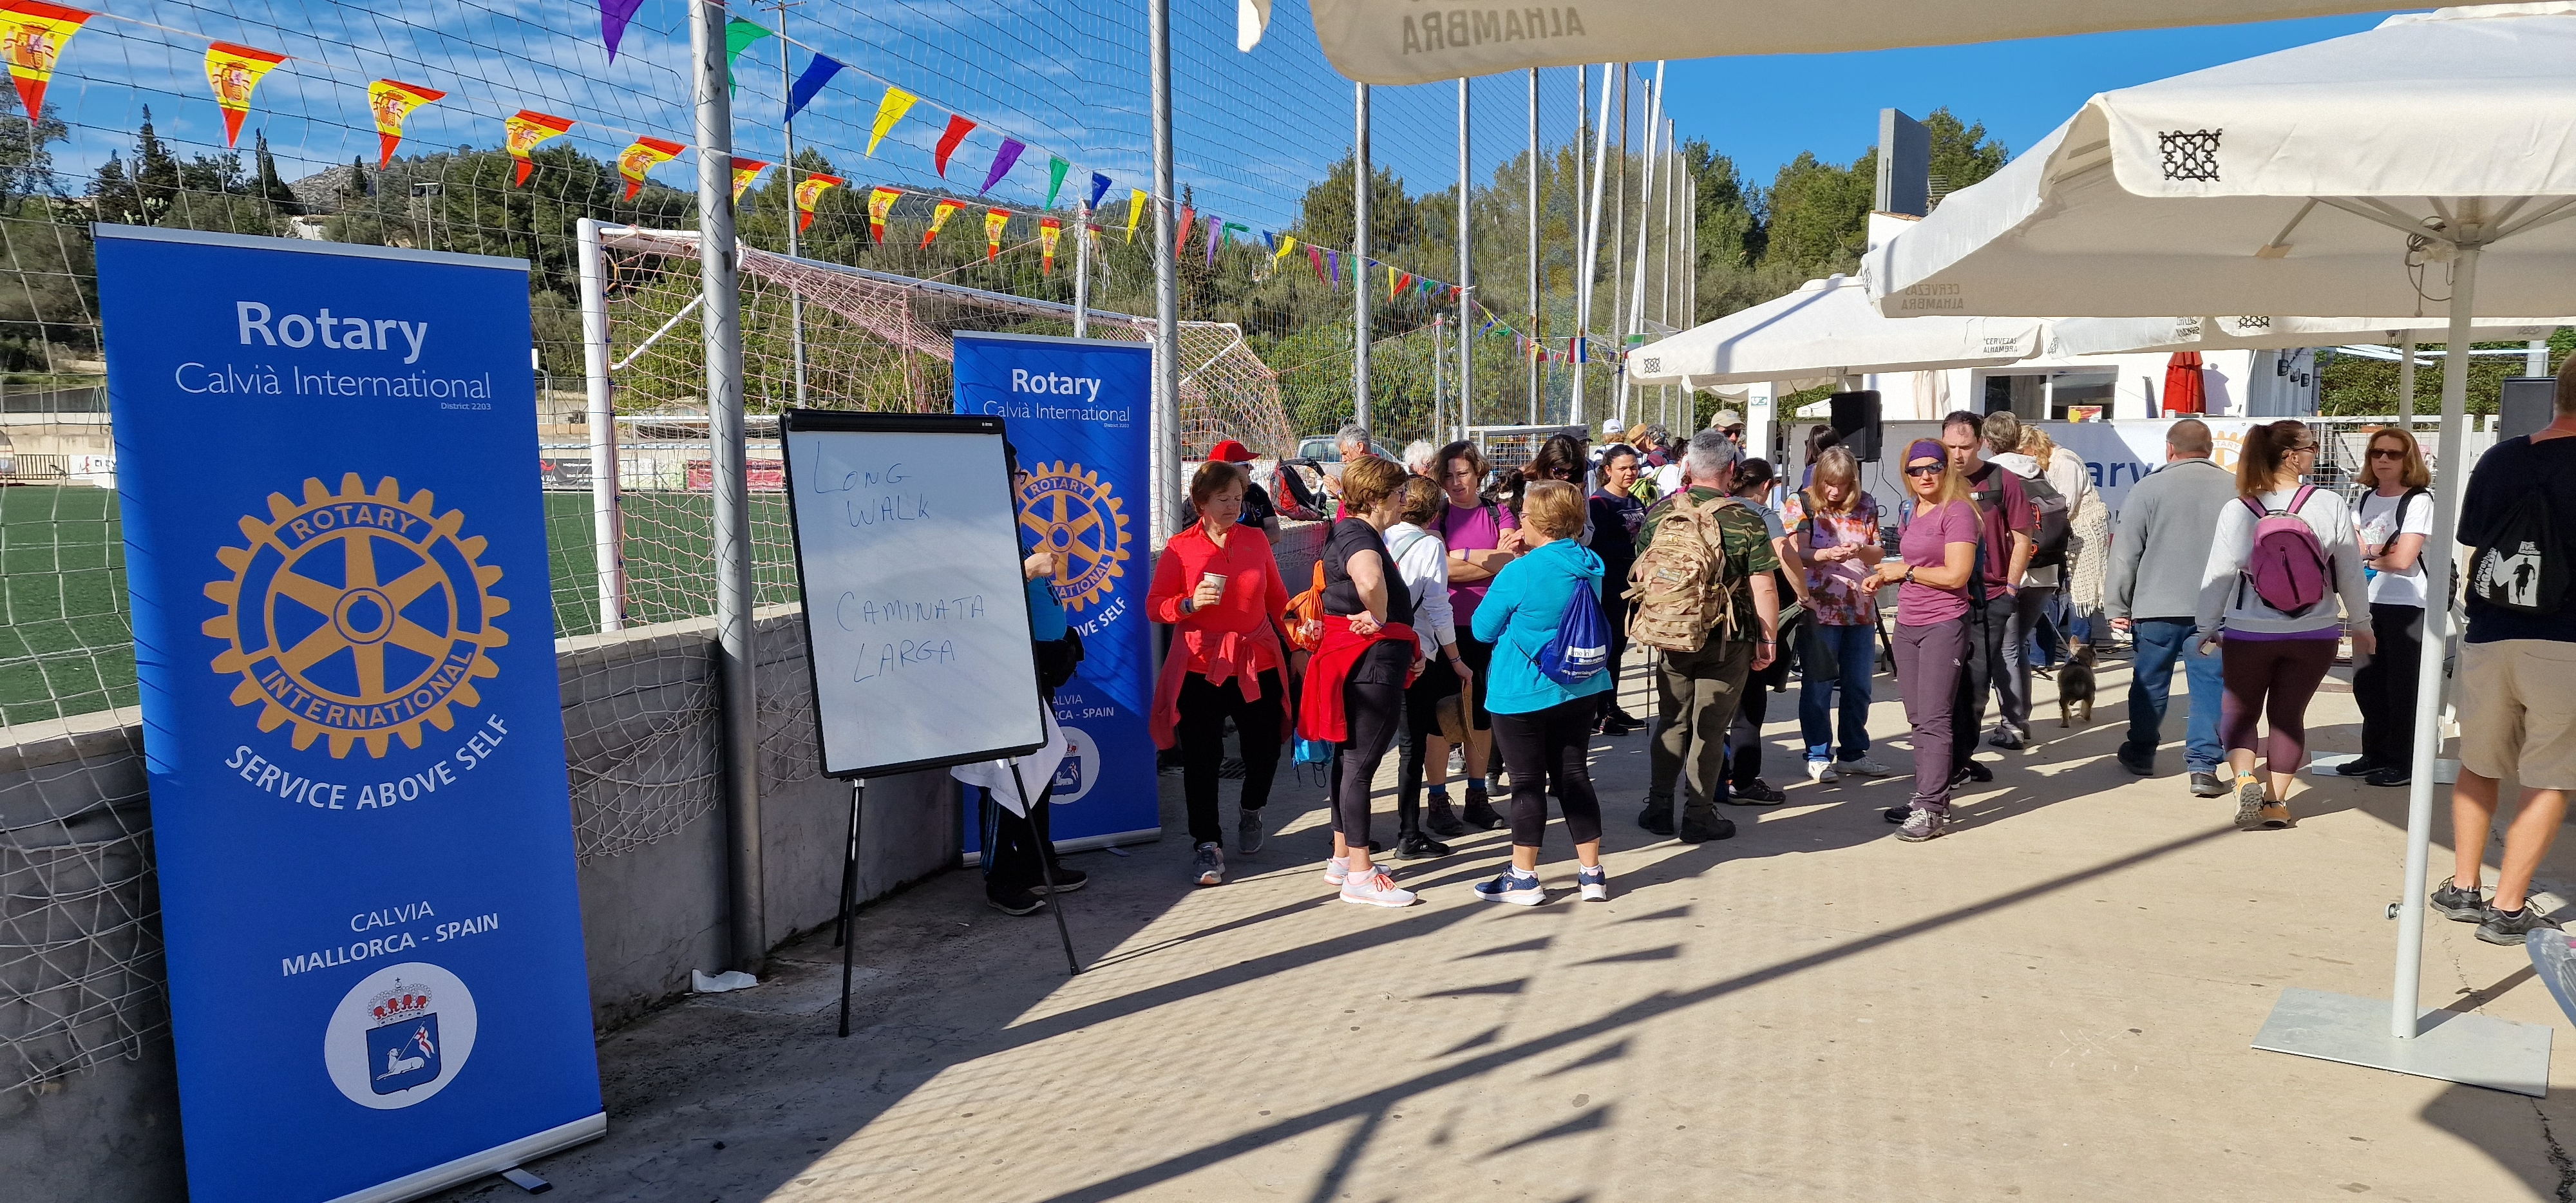 Short impression of the Rotary Calvia International Walk in S’Arraco